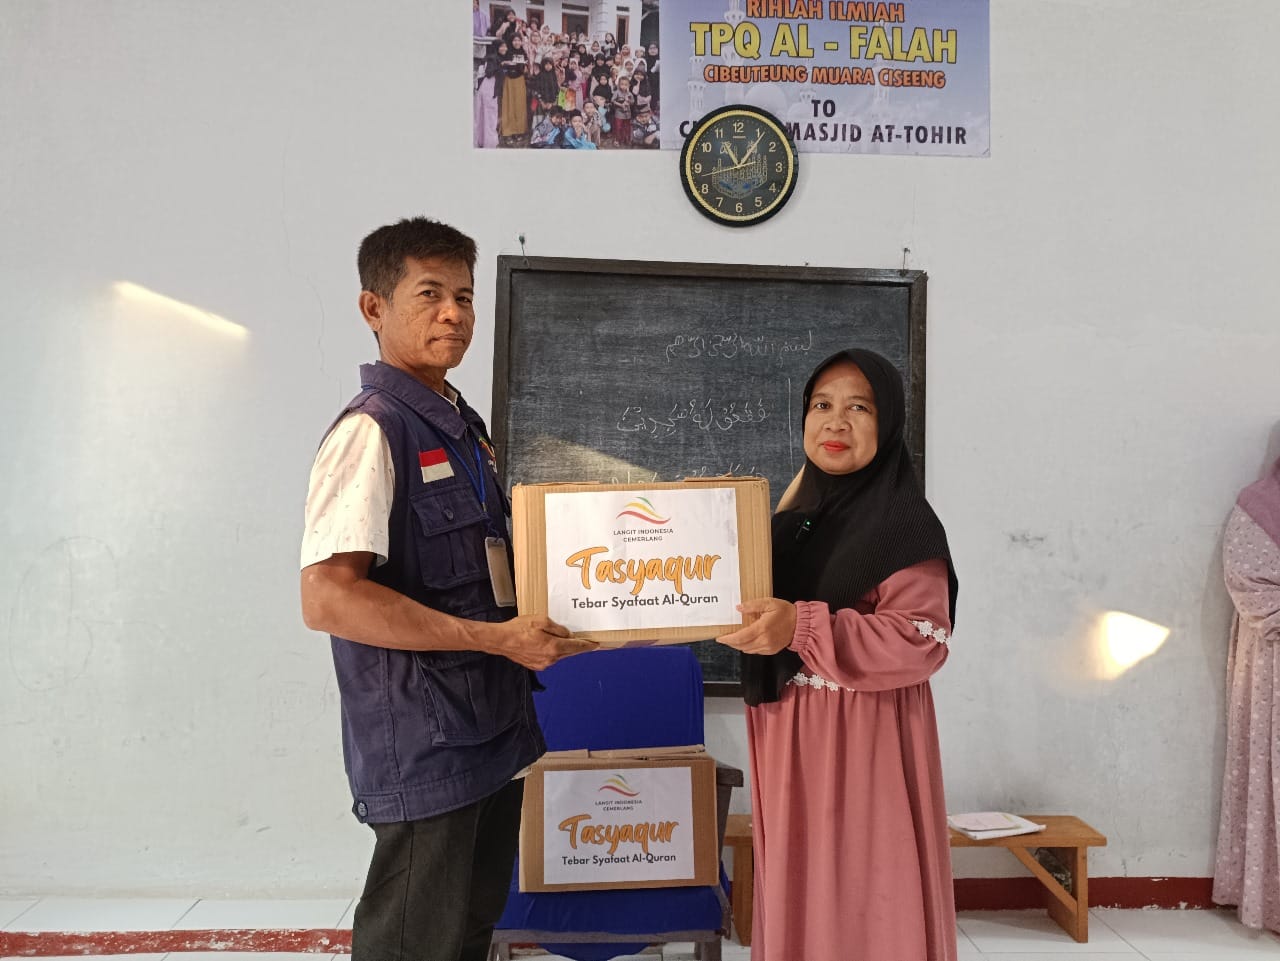 Yayasan Langit Indonesia Cemerlang Adakan Program Tebar Syafaat Al-Quran di Ciseeng Bogor
